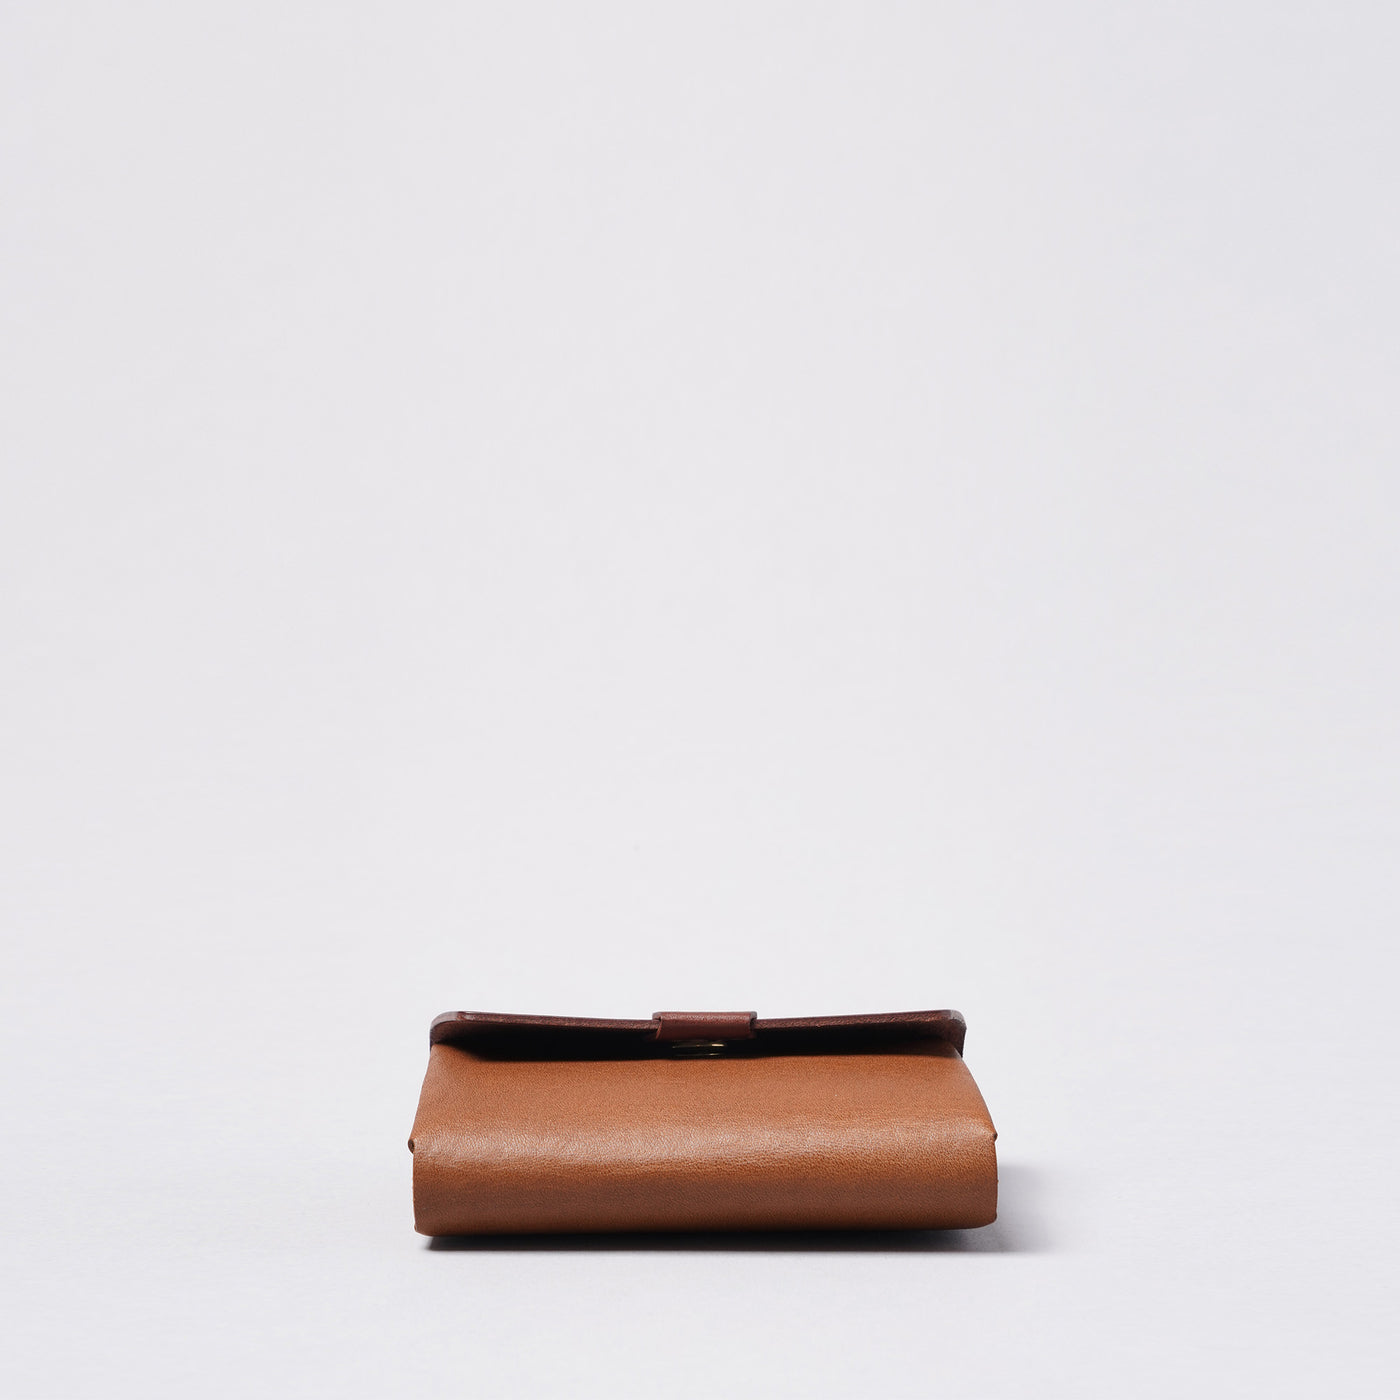 <URUKUST> Compact Wallet / Dark Brown